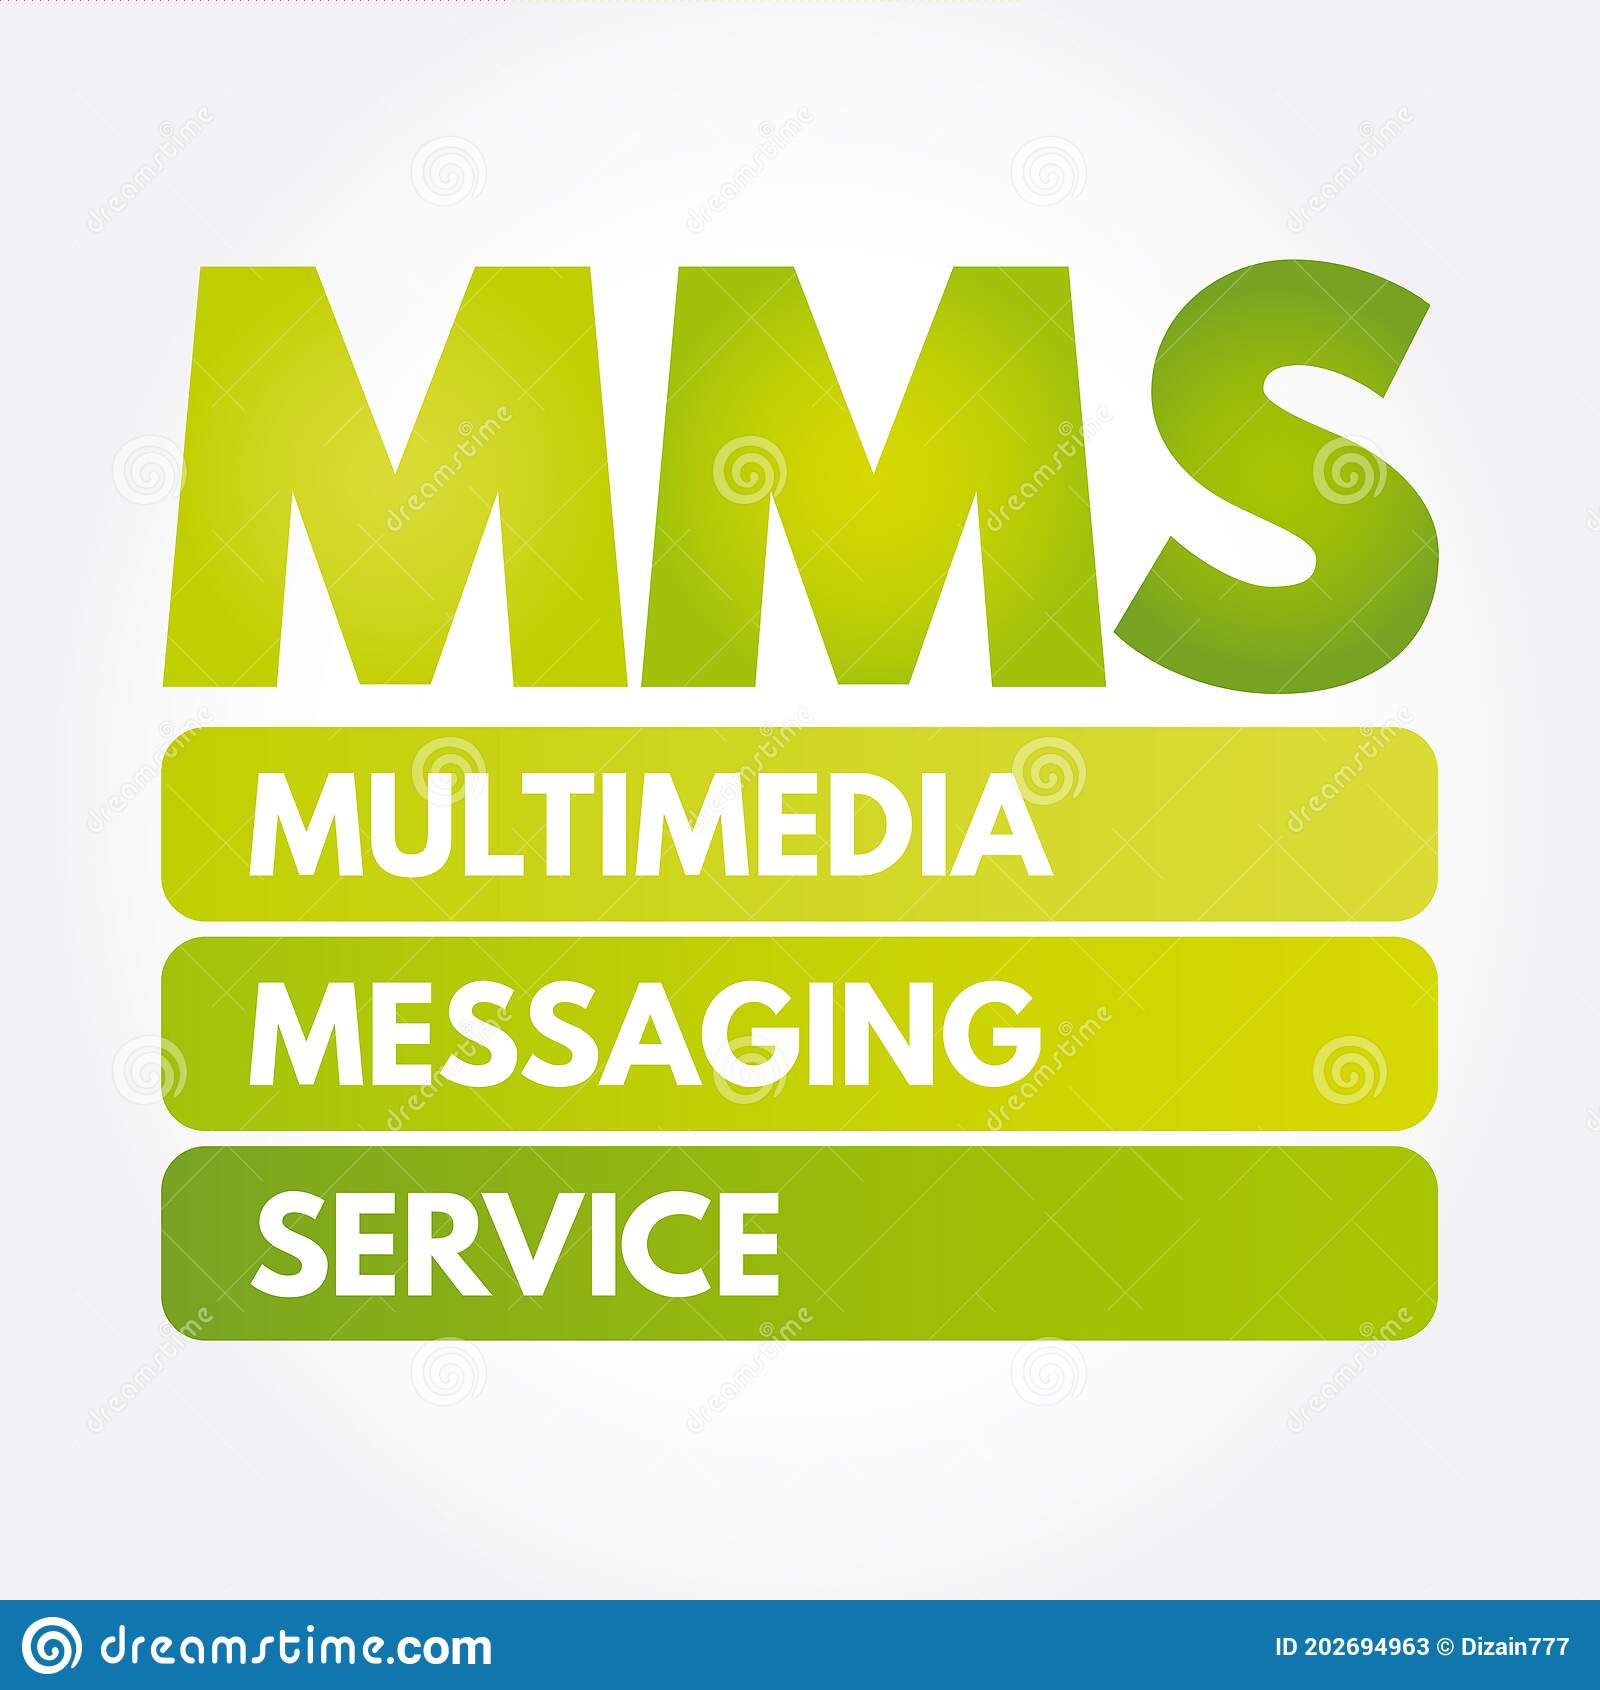 Multimedya Mesajlaşma Hizmeti (MMS)